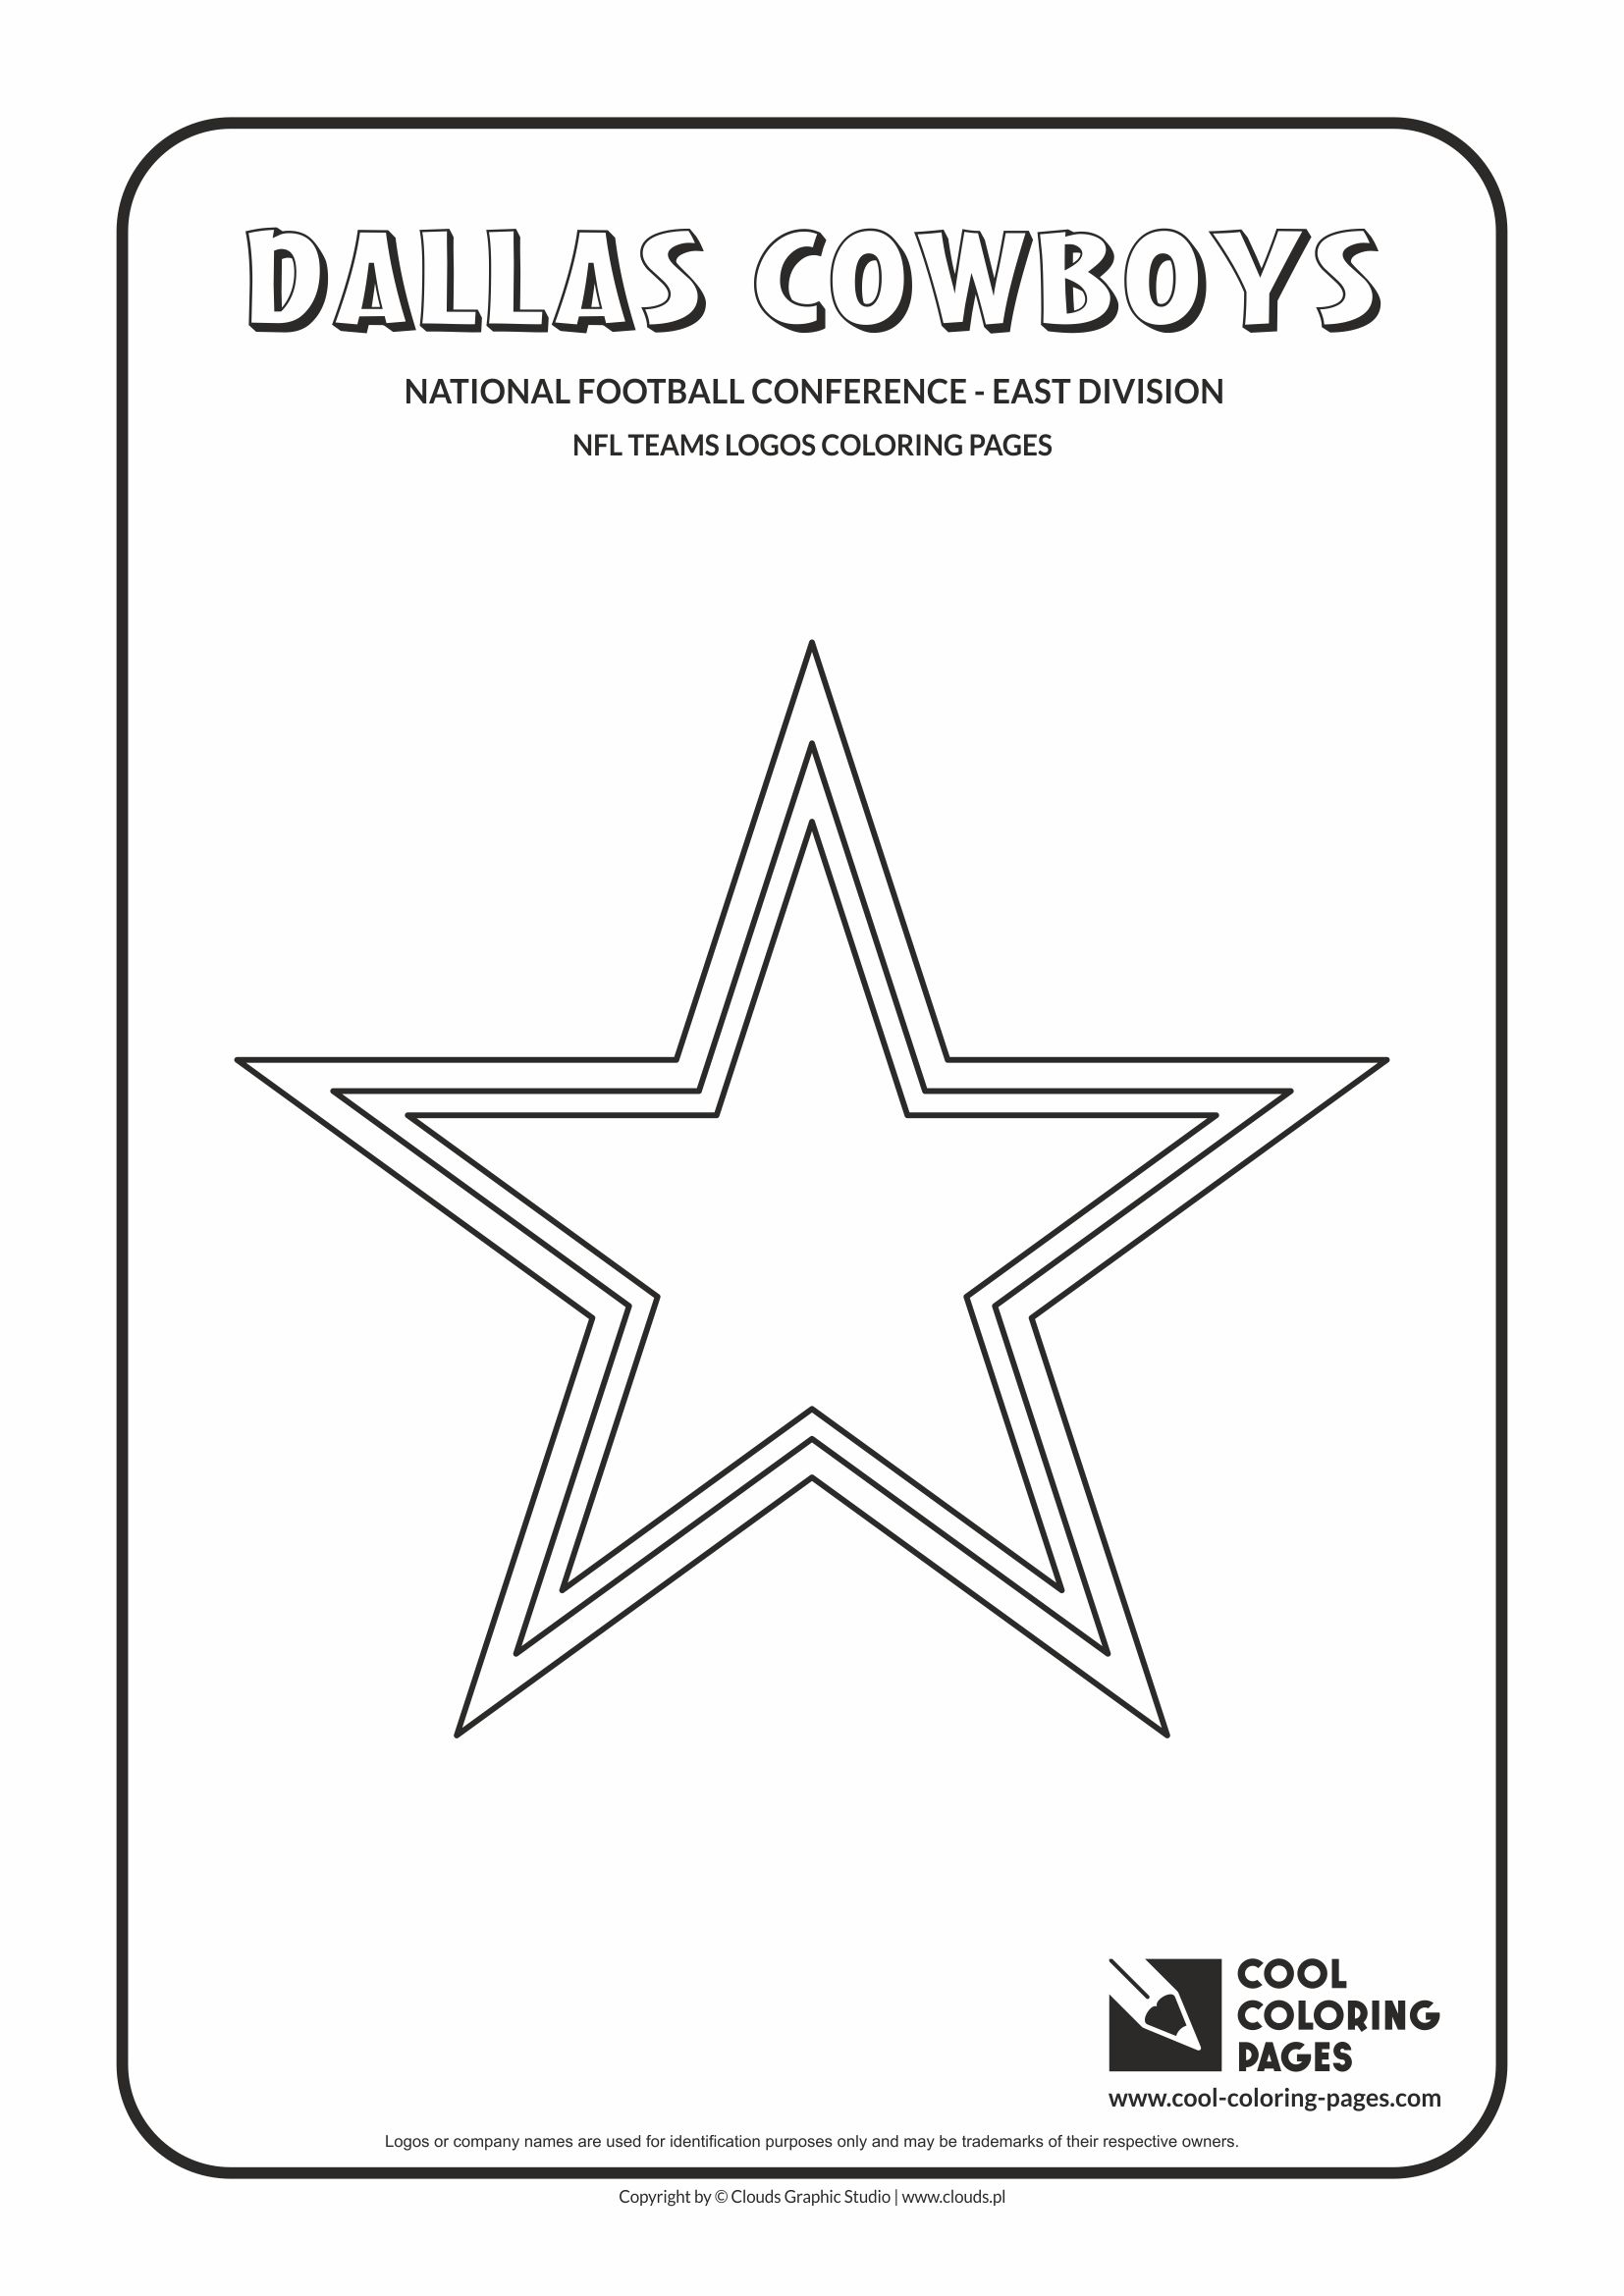 Cool Coloring Pages Dallas Cowboys - NFL American football teams logos ...